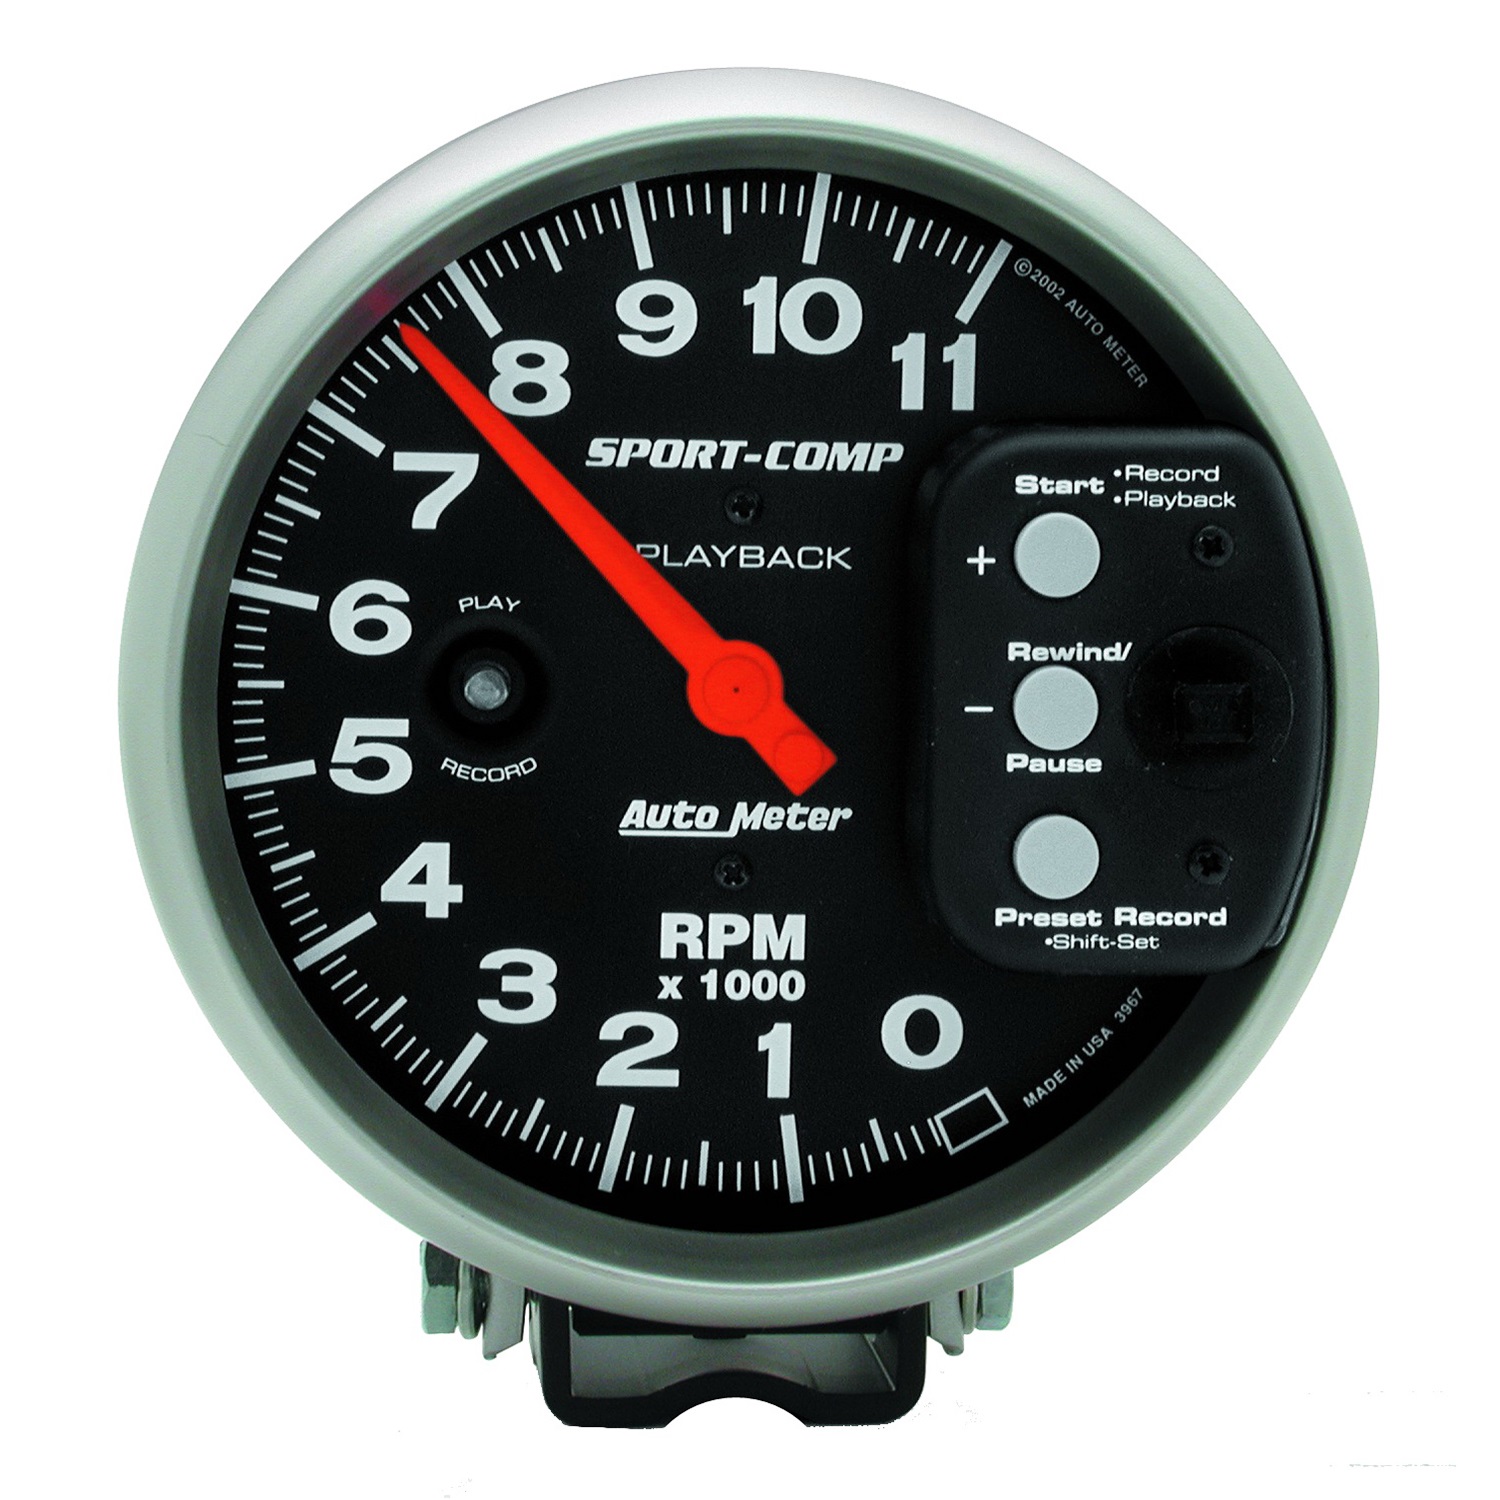 Auto Meter Auto Meter 3967 Sport-Comp; Playback Tachometer